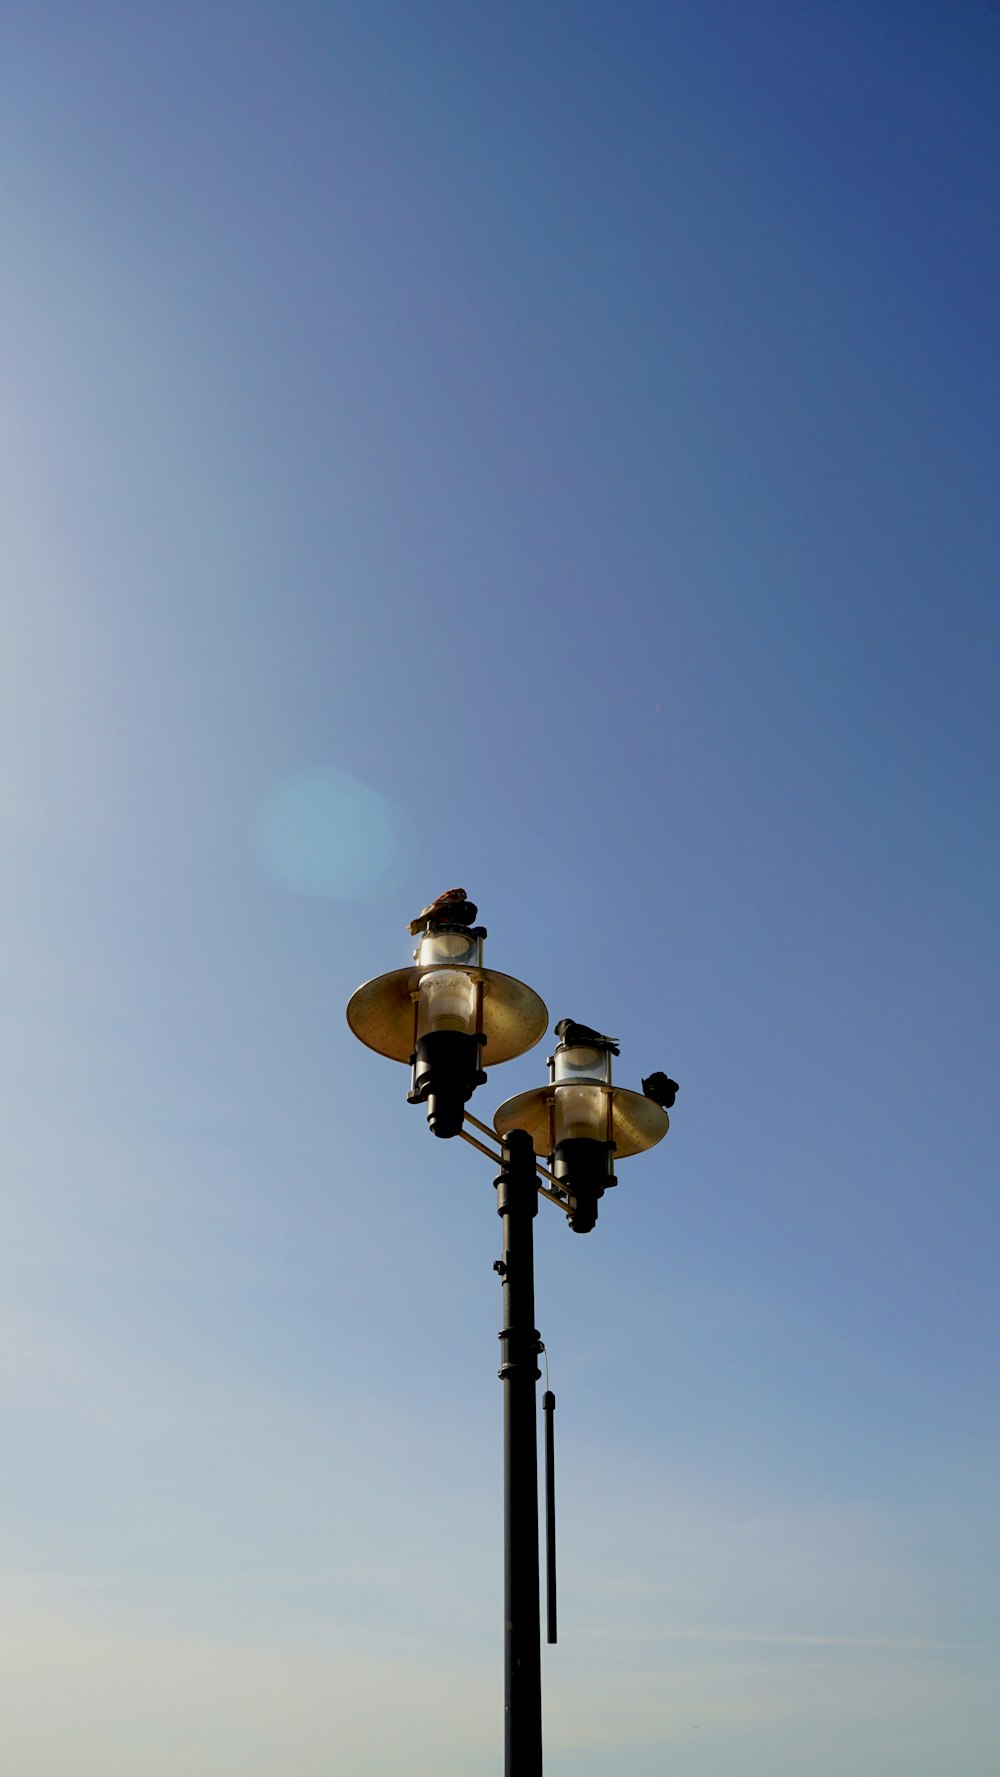 a light post with a blue sky